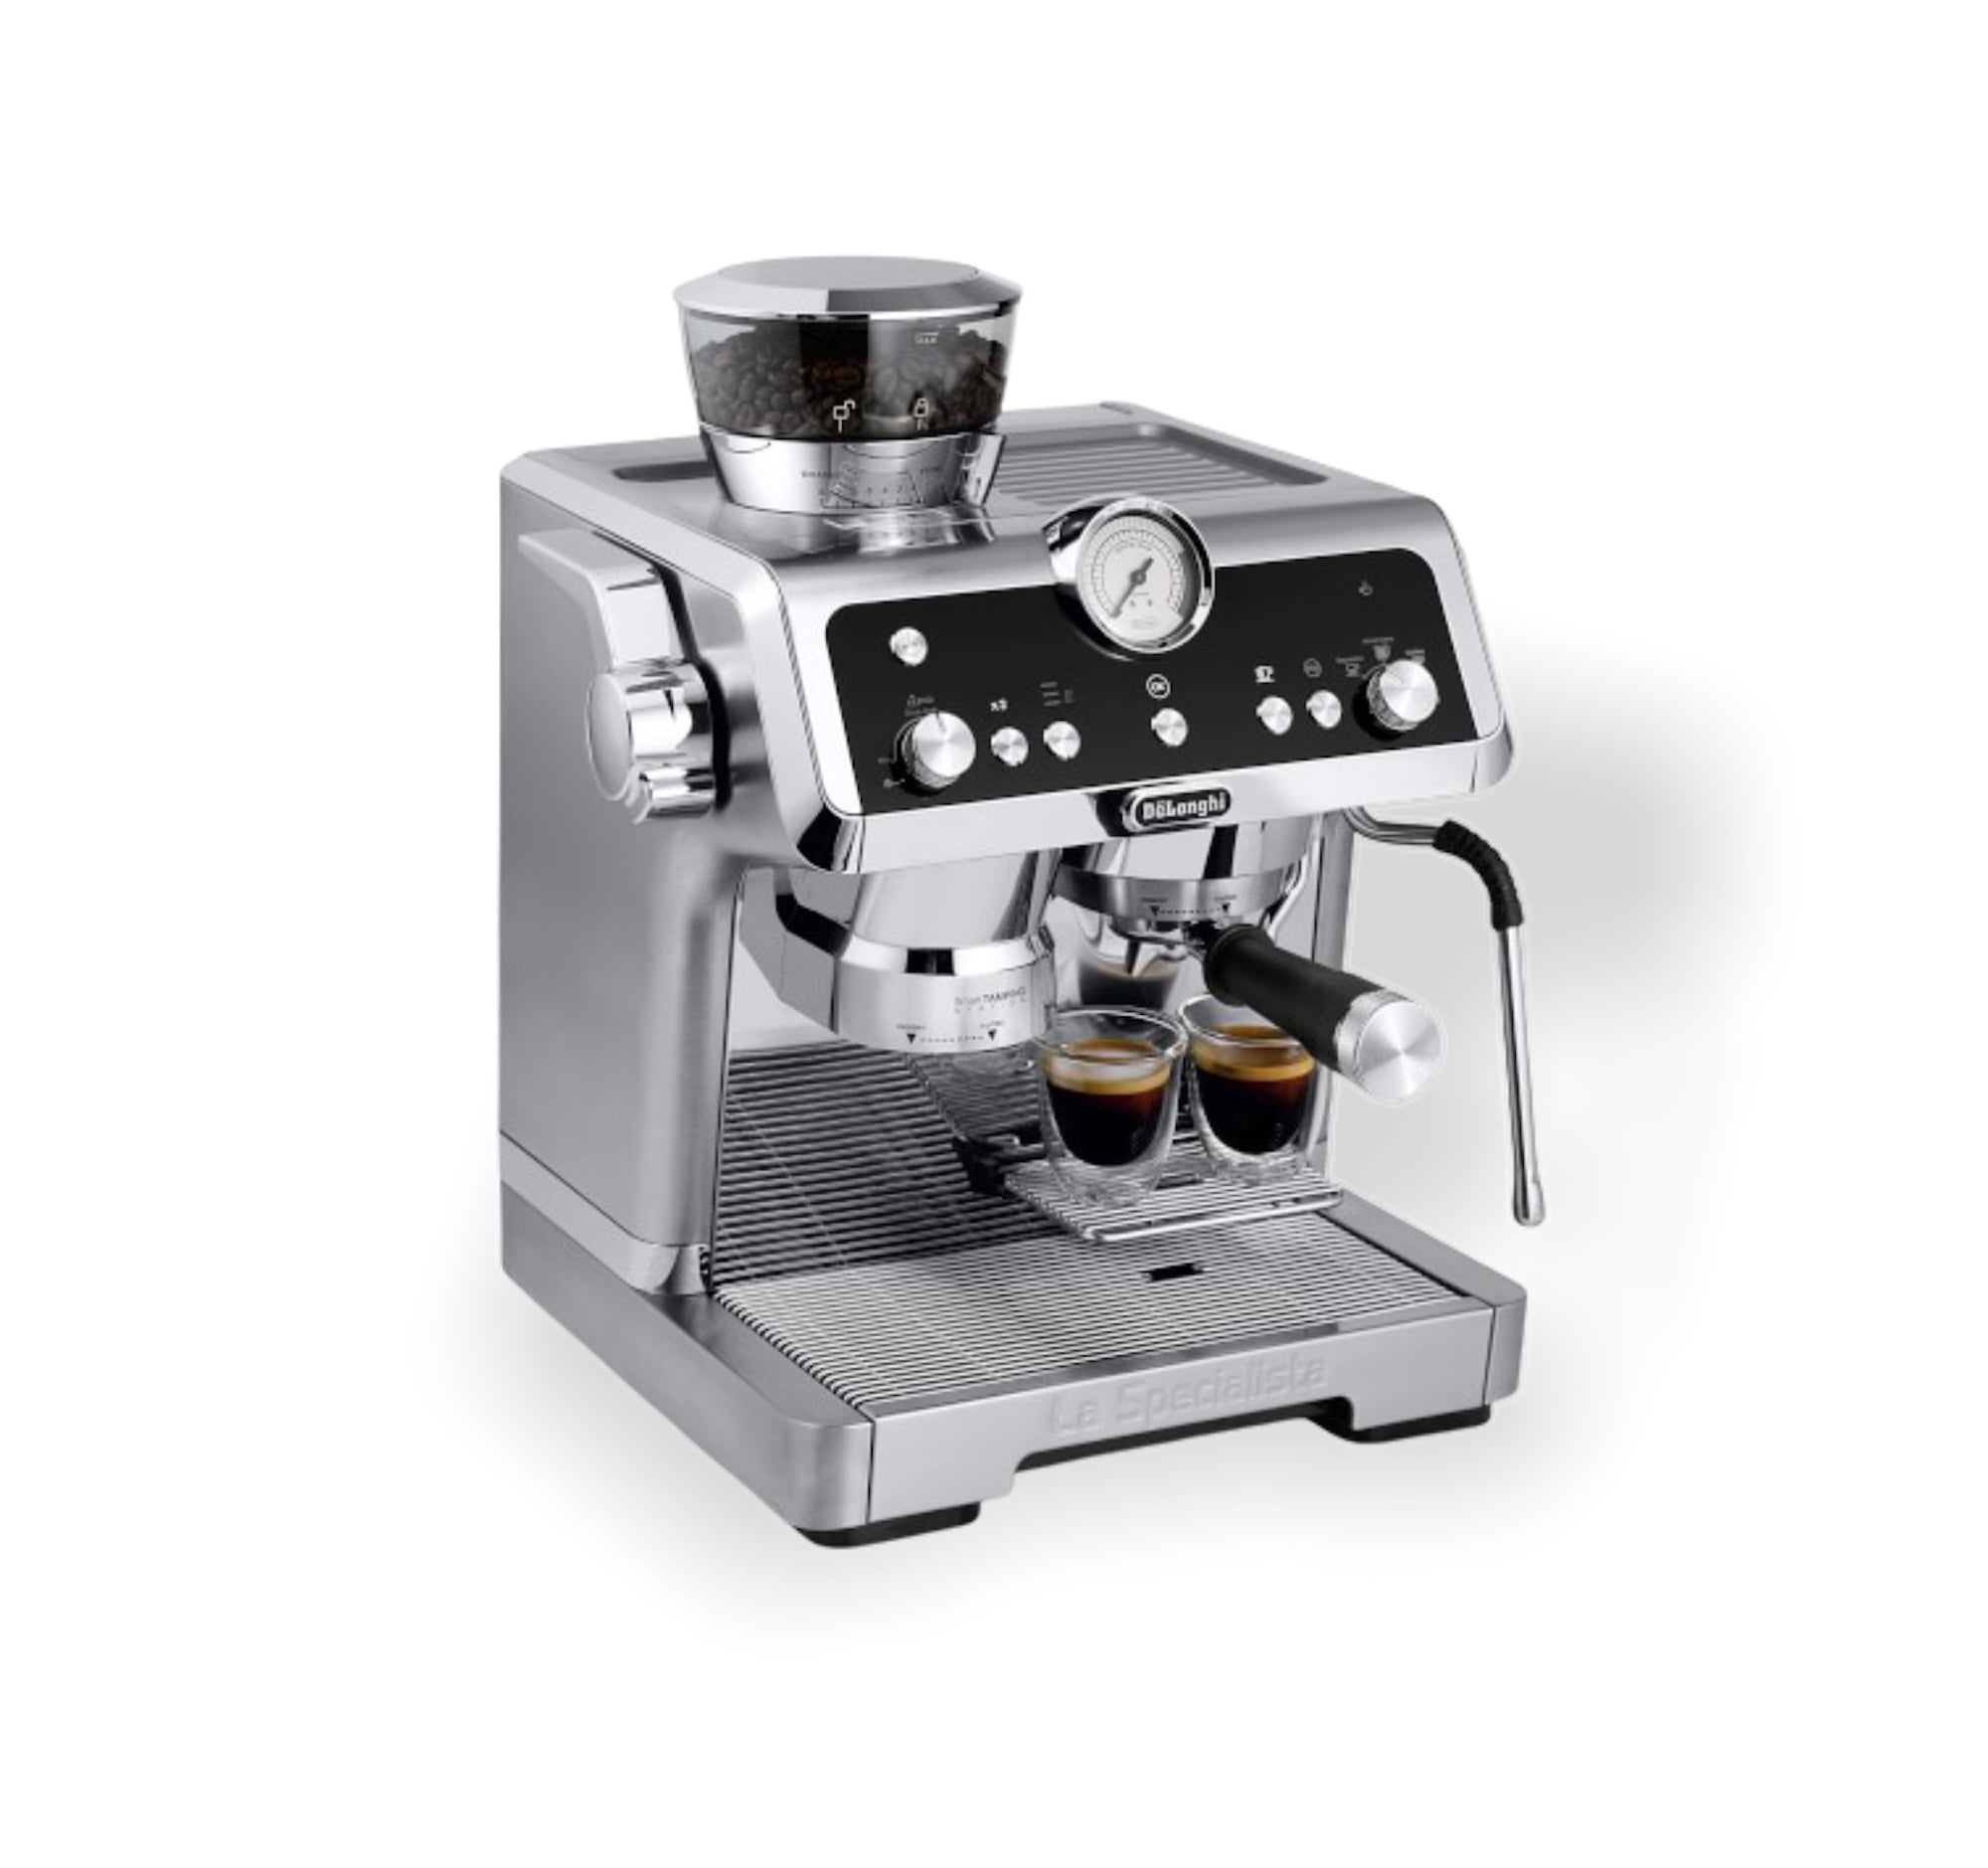 Machine à espresso semi-automatique Specialista Prestigio de Delonghi -  Ares Accessoires de cuisine